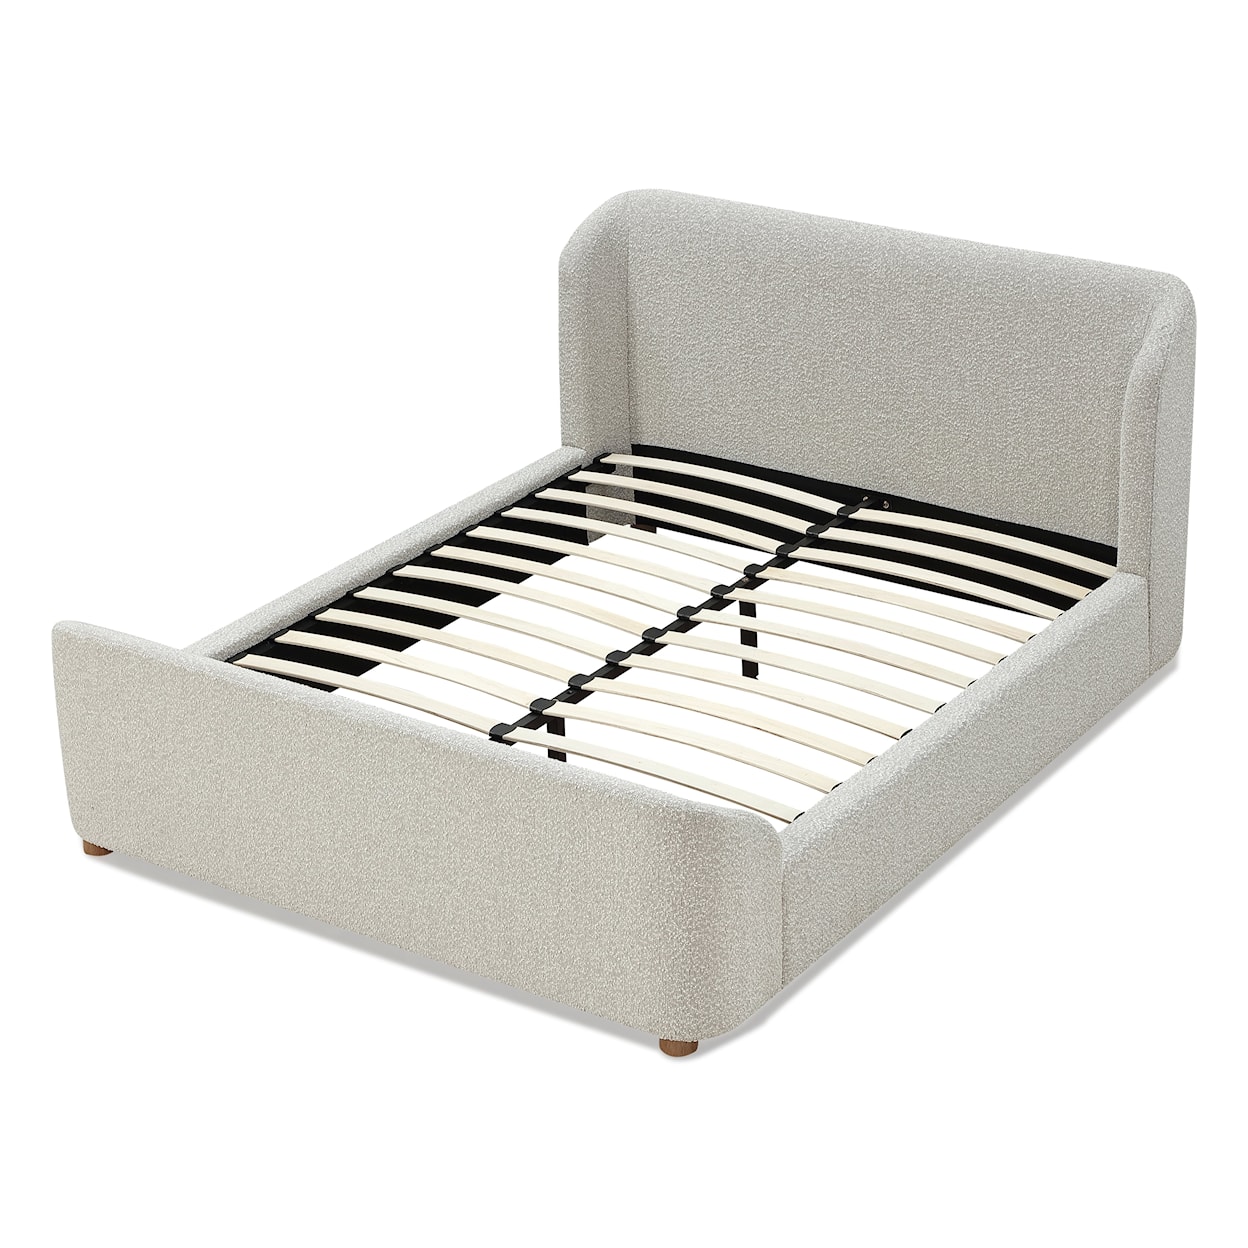 Modus International Kiki Cal King Upholstered Platform Bed